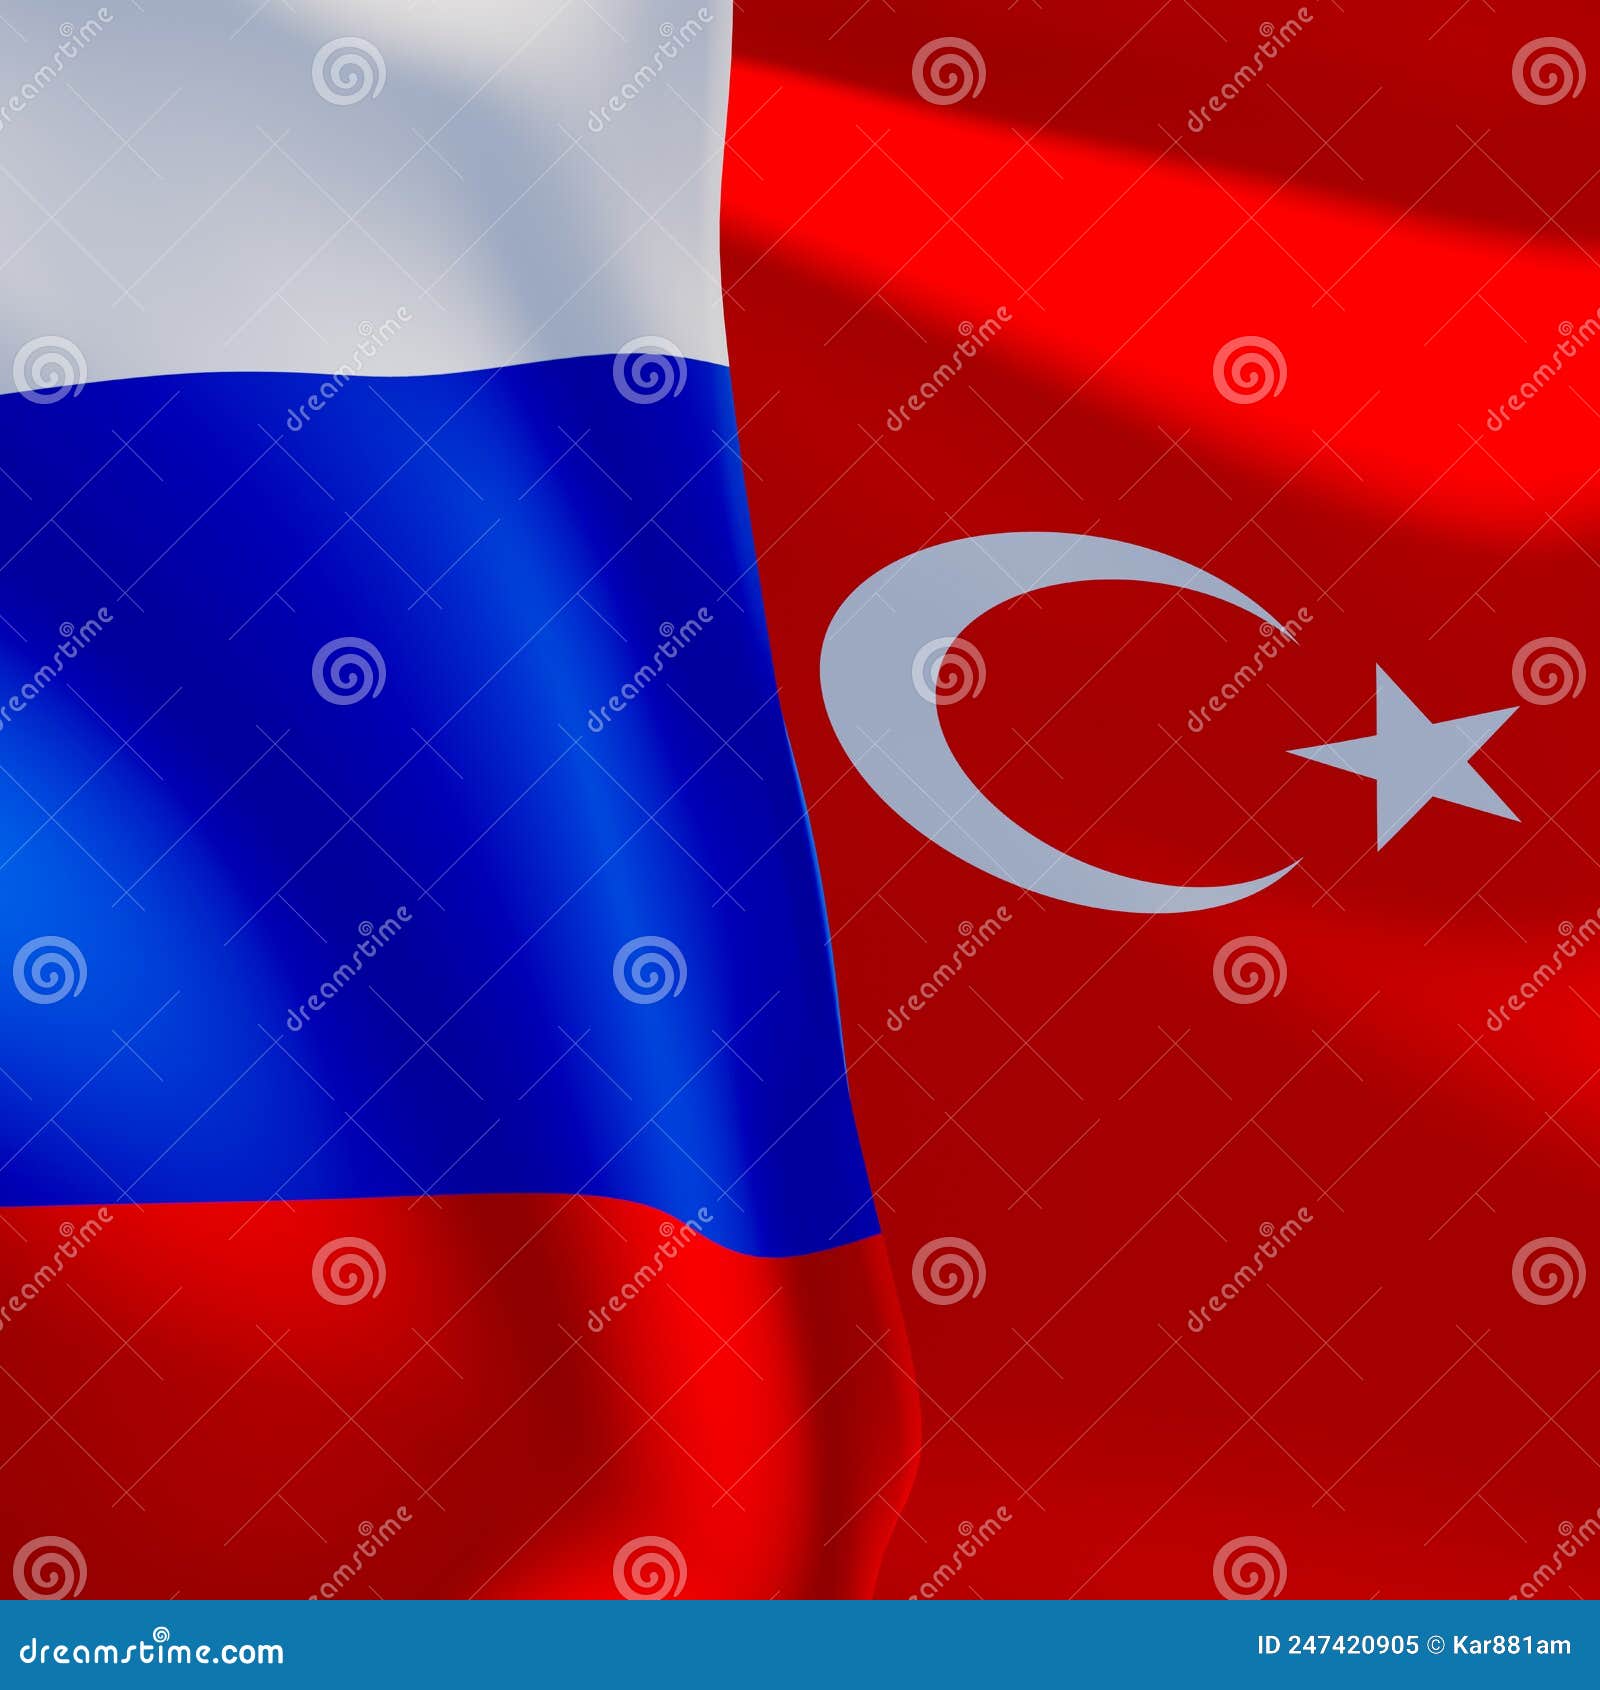 https://thumbs.dreamstime.com/z/russland-und-t%C3%BCrkei-russische-flagge-putenflagge-d-arbeit-bild-247420905.jpg